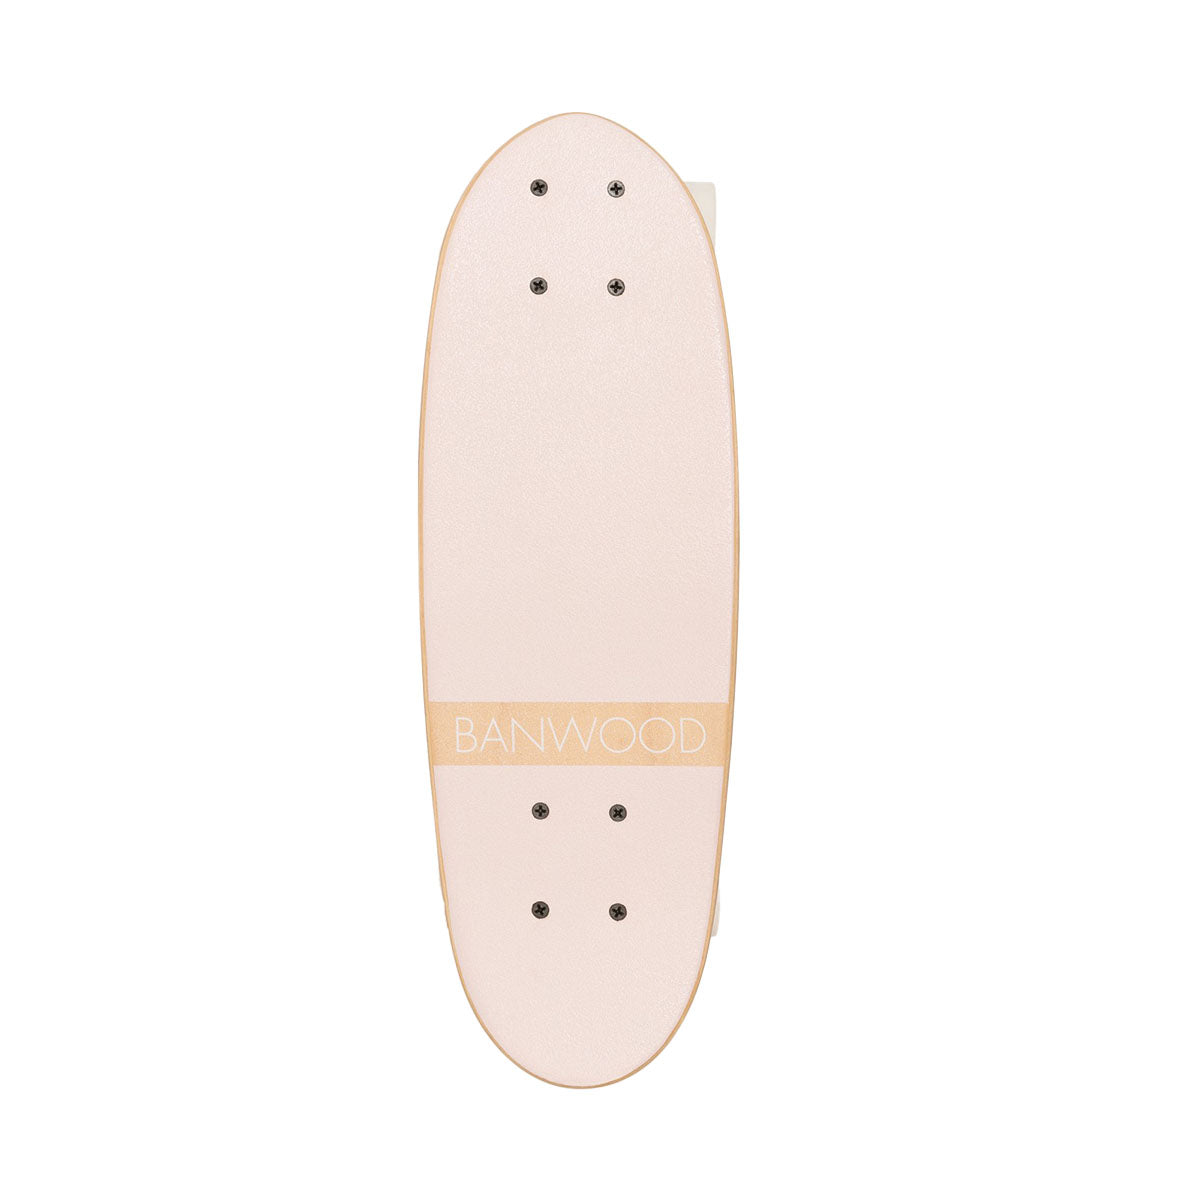 Voor stoere kinderen is dit toffe Banwood skateboard in pink ideaal! Dit skateboard is een klein cruiserboard, speciaal ontworpen voor zowel beginners als gevorderde skateboarders. VanZus